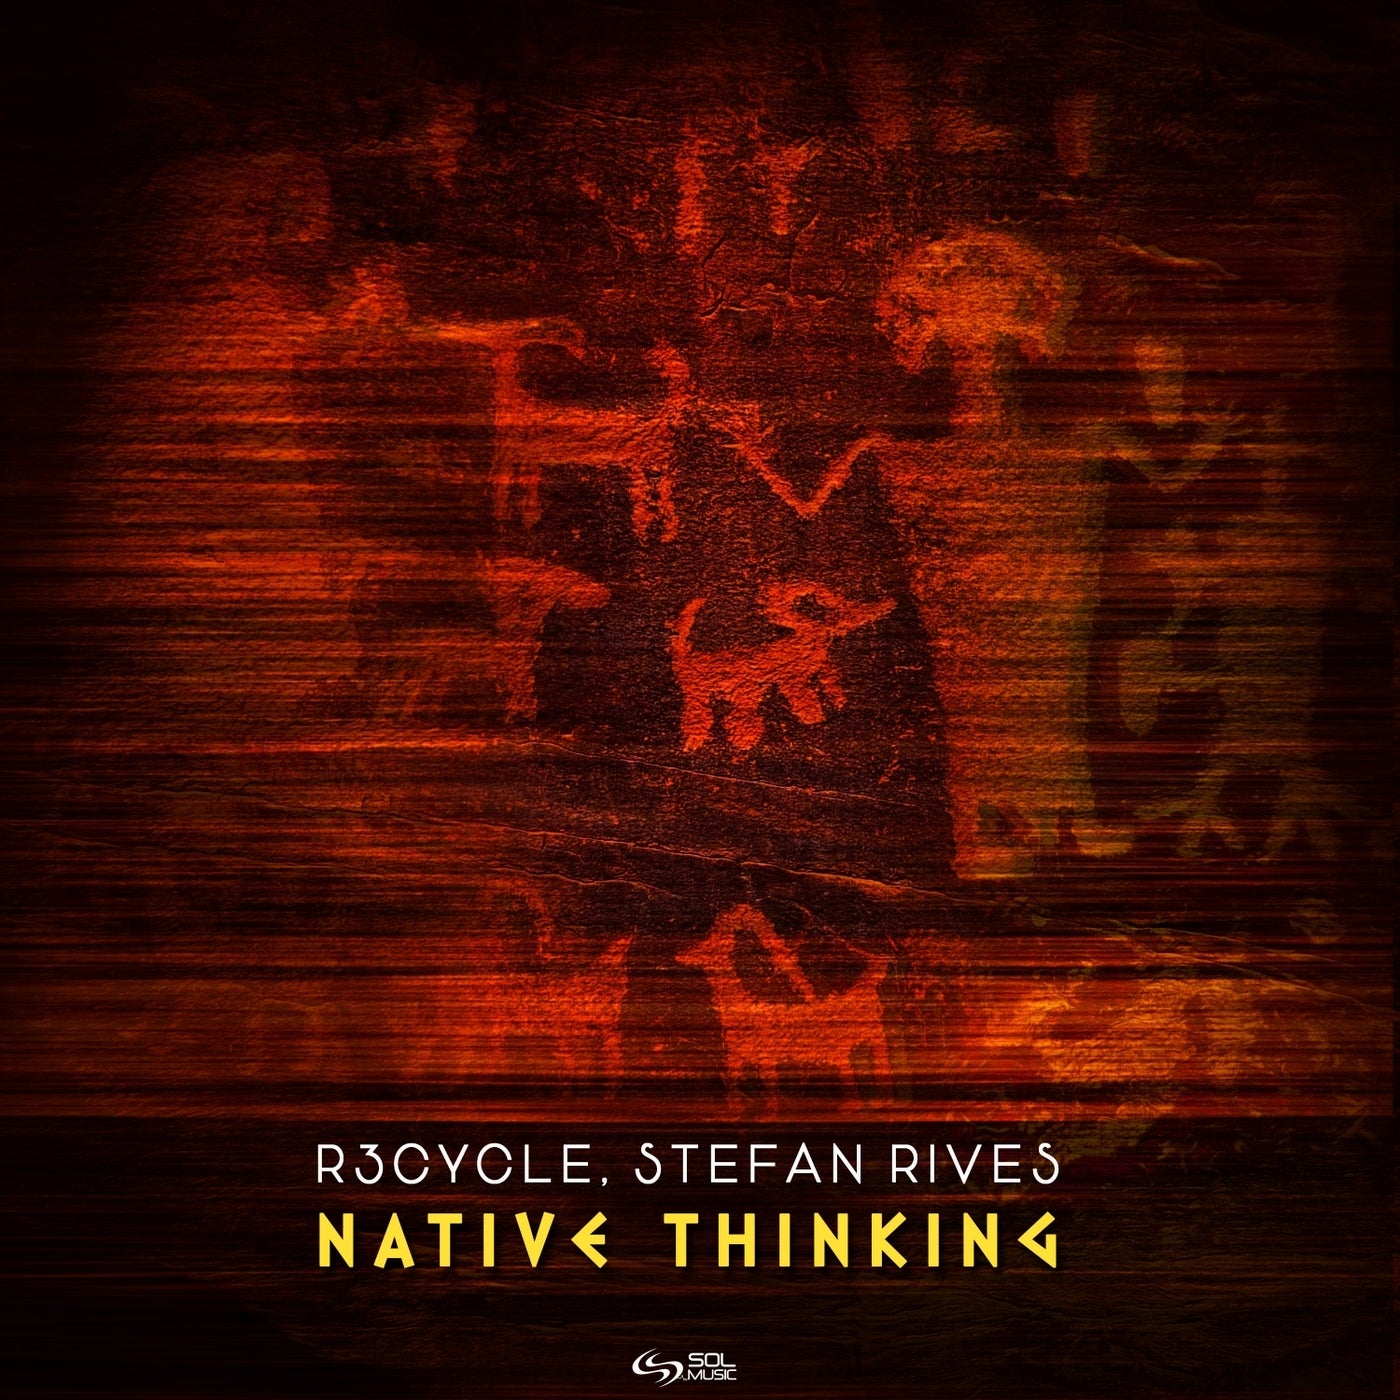 Native Thinking